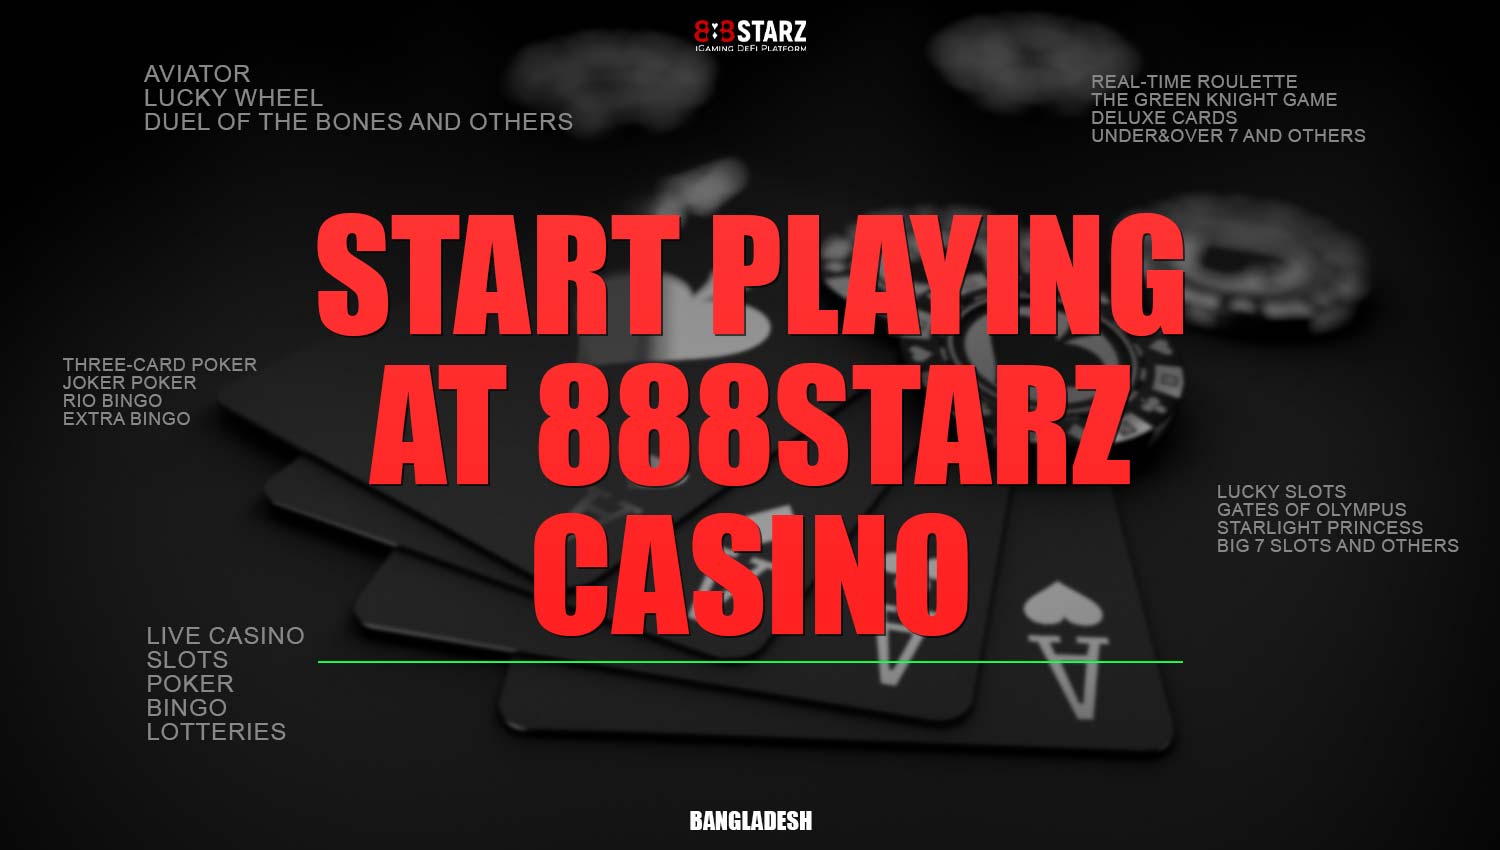 Start playing at 888Starz casino.